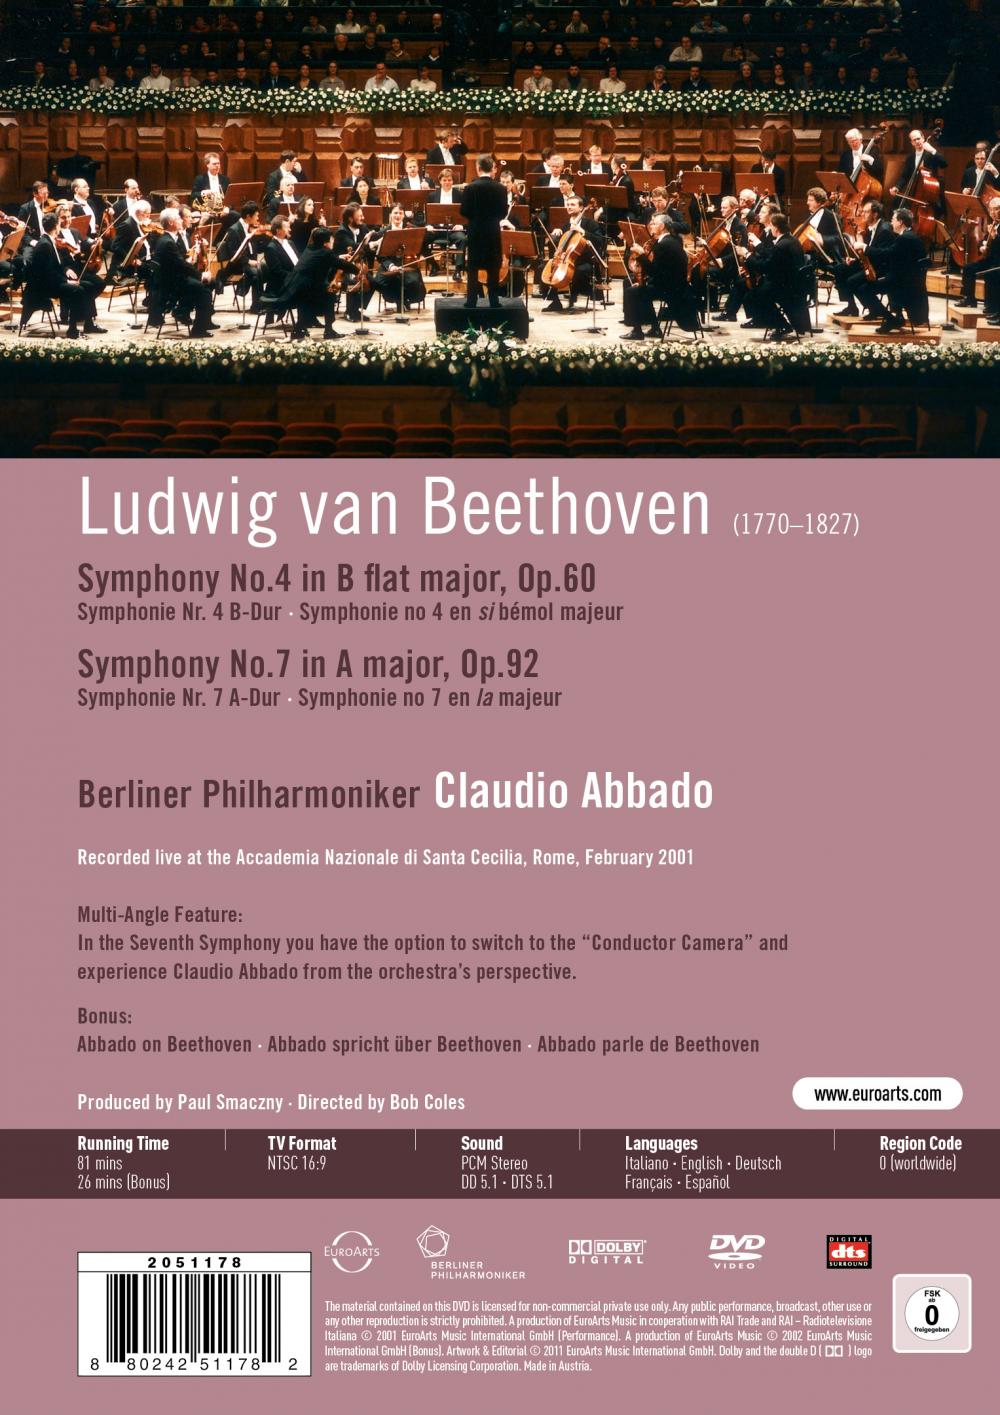 BEETHOVEN: Symphonies 4 & 7 - Berlin Philharmonic, Claudio Abbado (DVD)